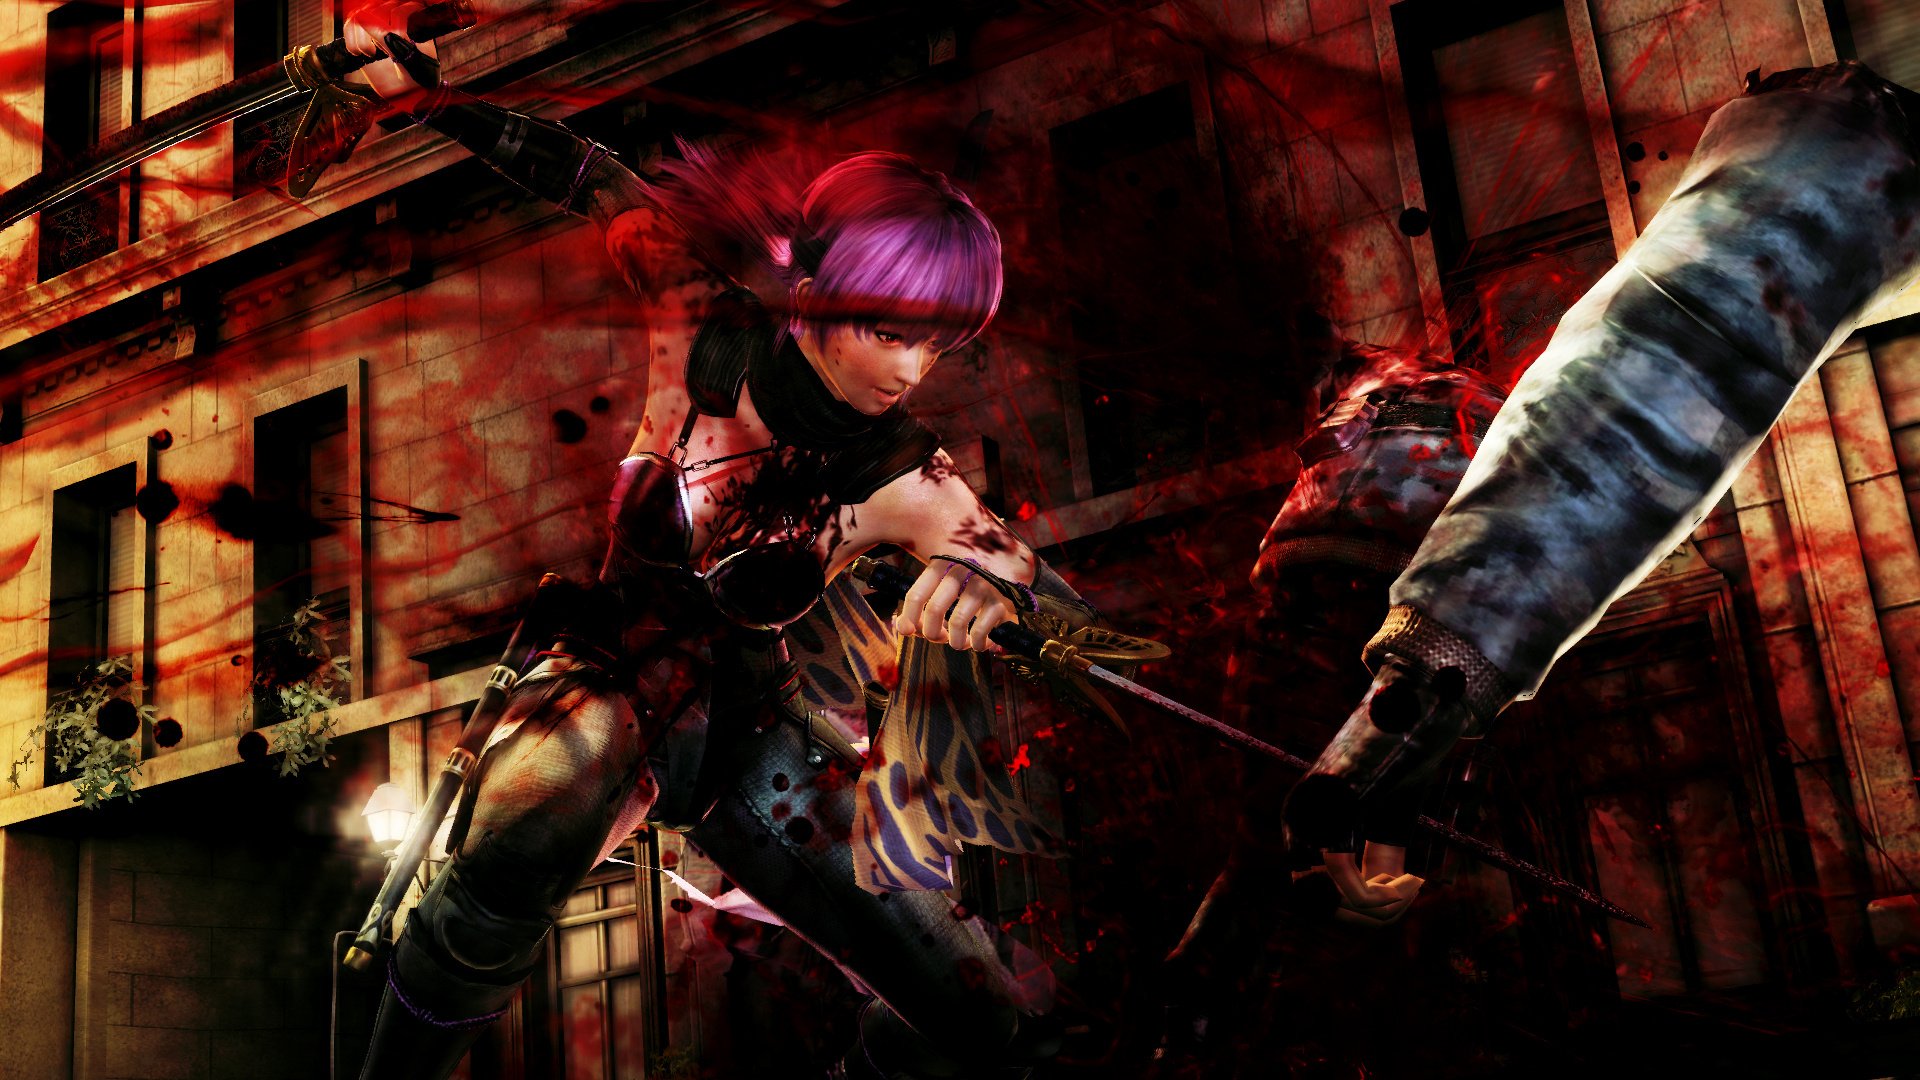 Ninja Gaiden 3: Razor's Edge (Wii U) Game Profile | News ...